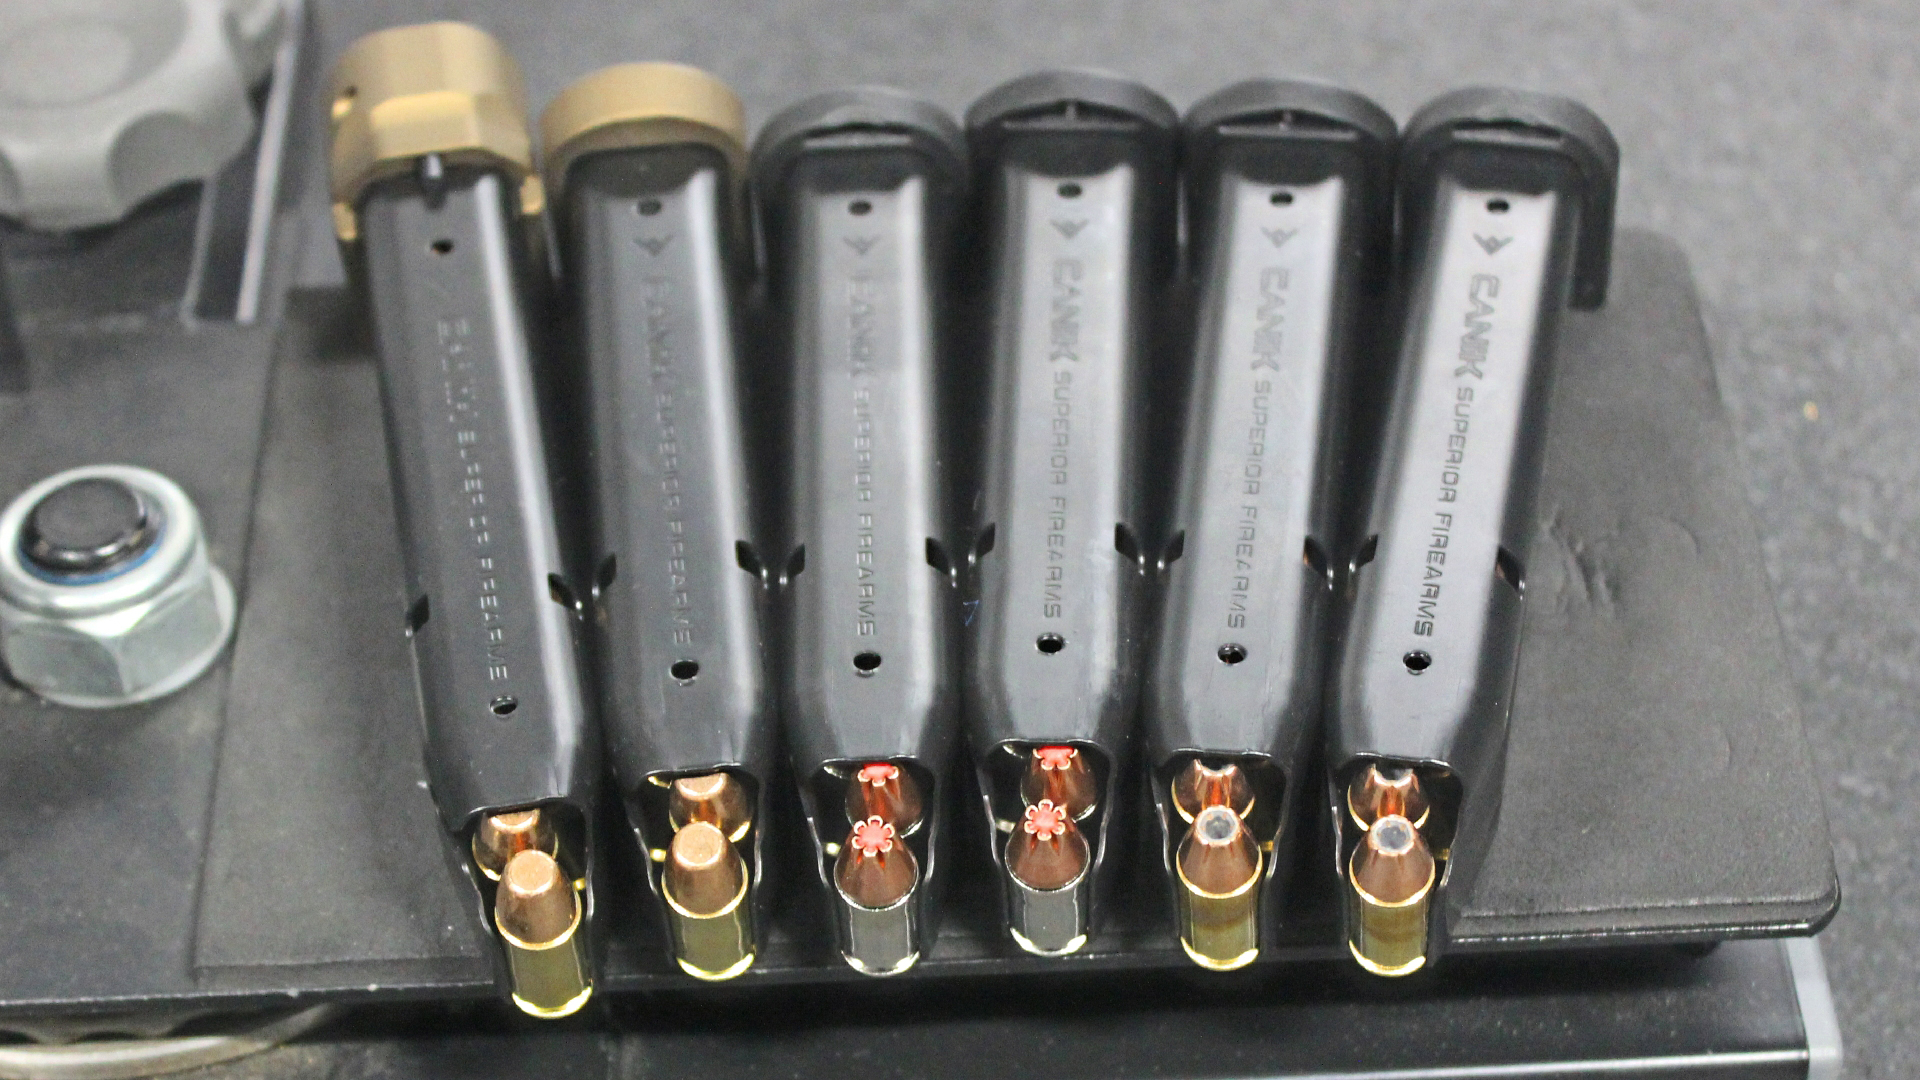 Six pistol handgun magazines row line ammunition